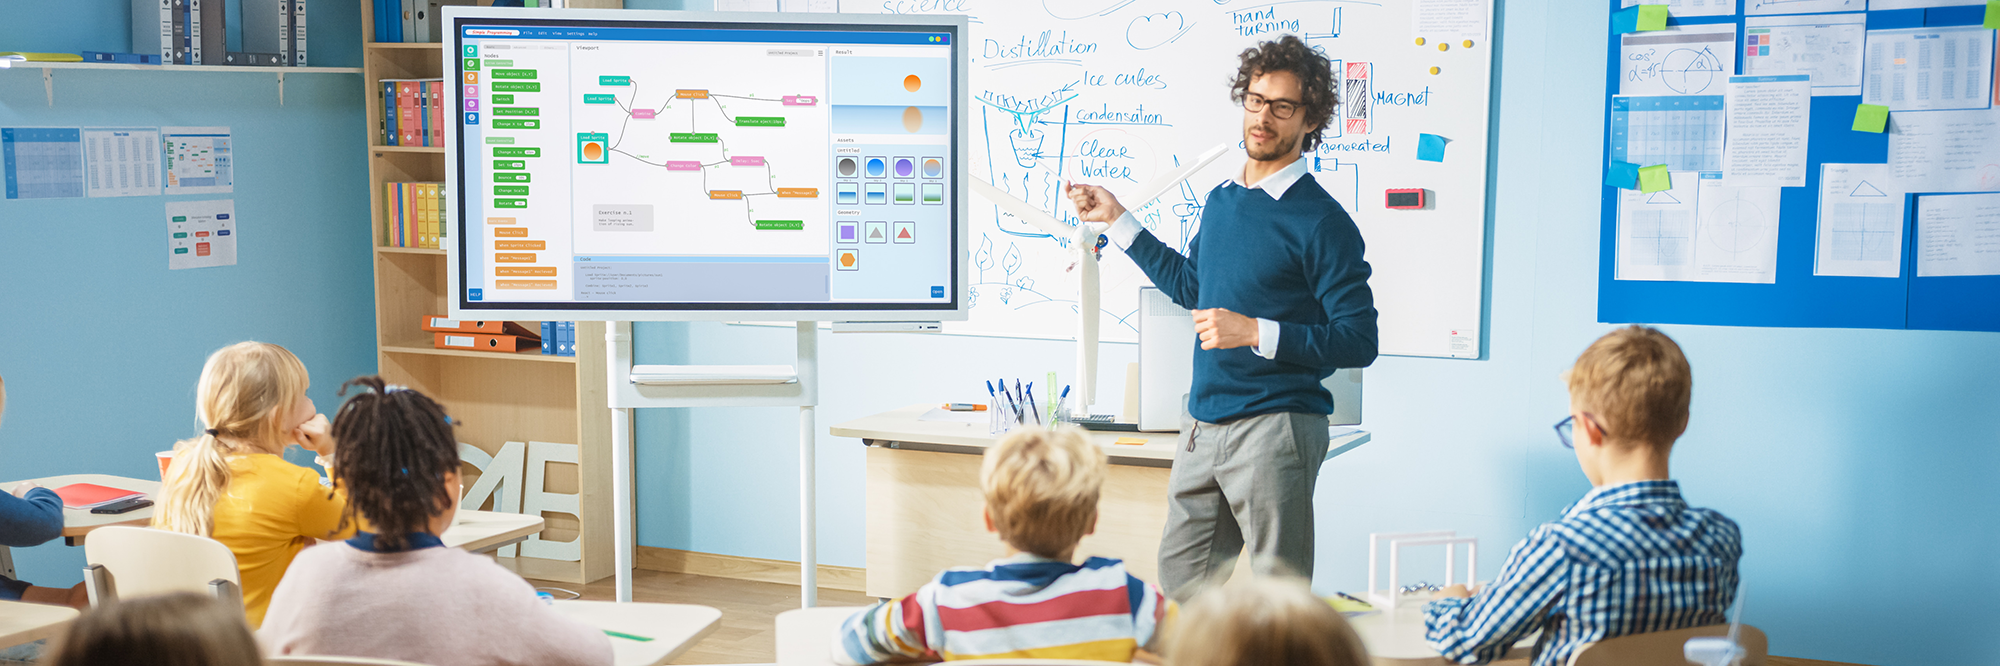 Male teacher using a digital whiteboard in front of a classroom | Digital classroom